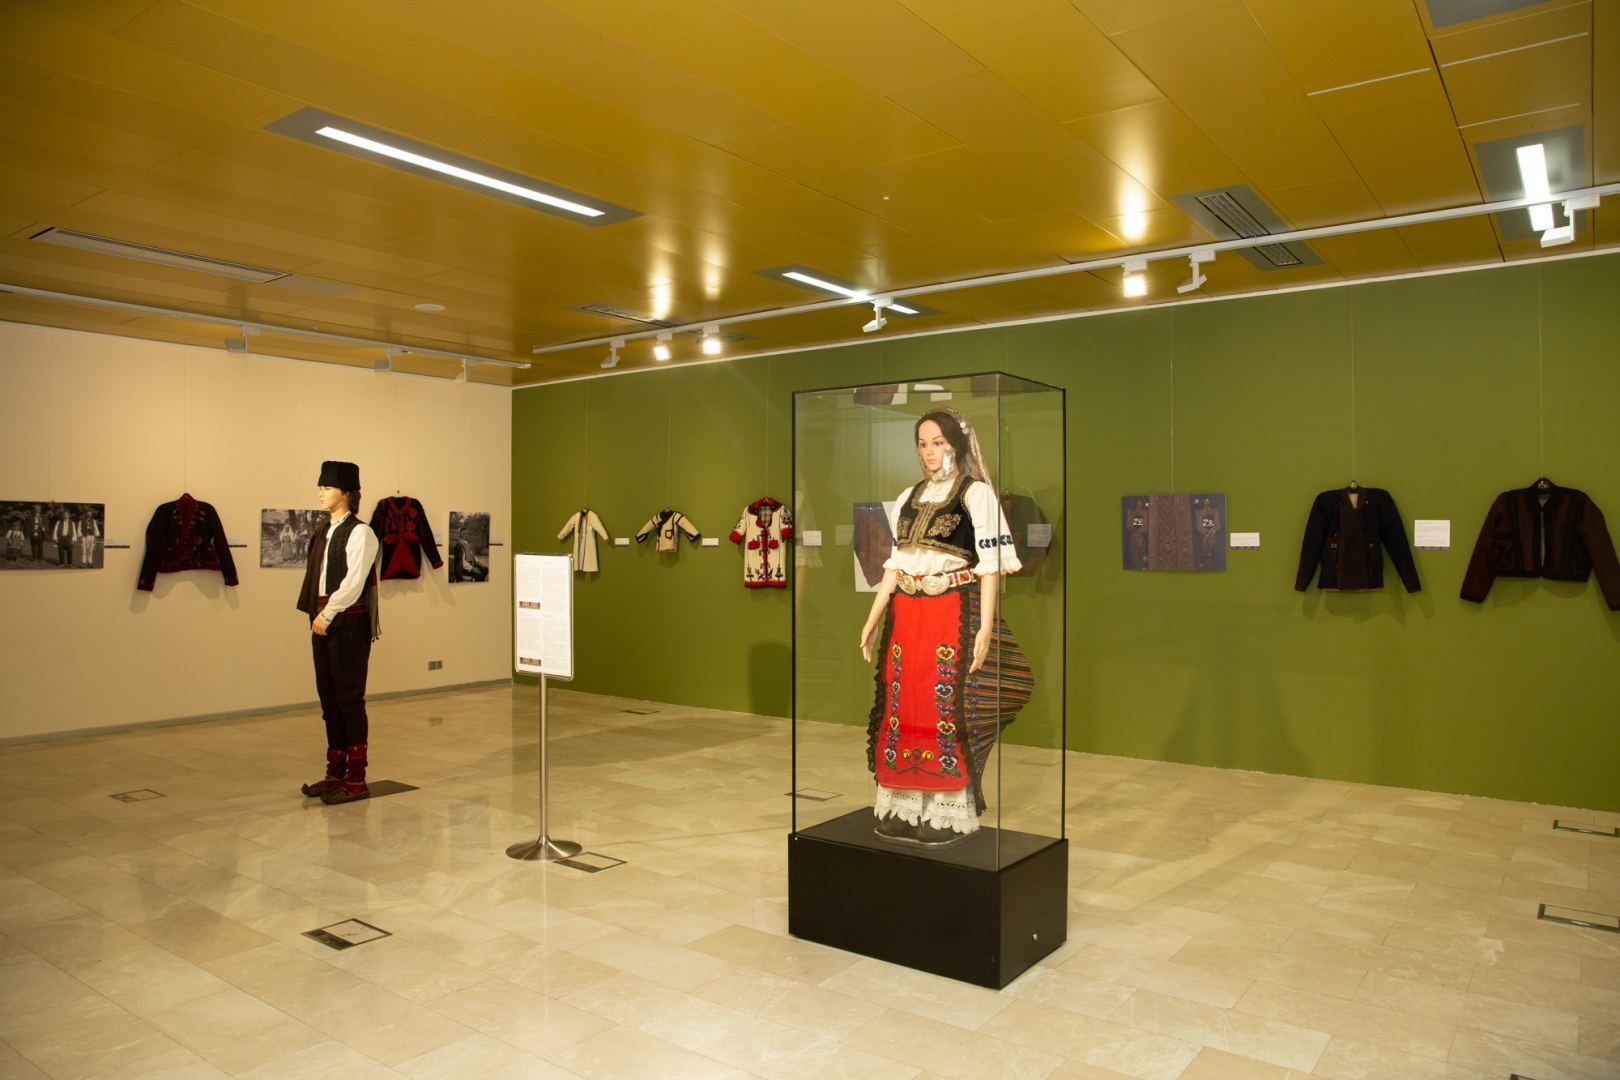 Serbian traditional costumes on display in Baku [PHOTO]